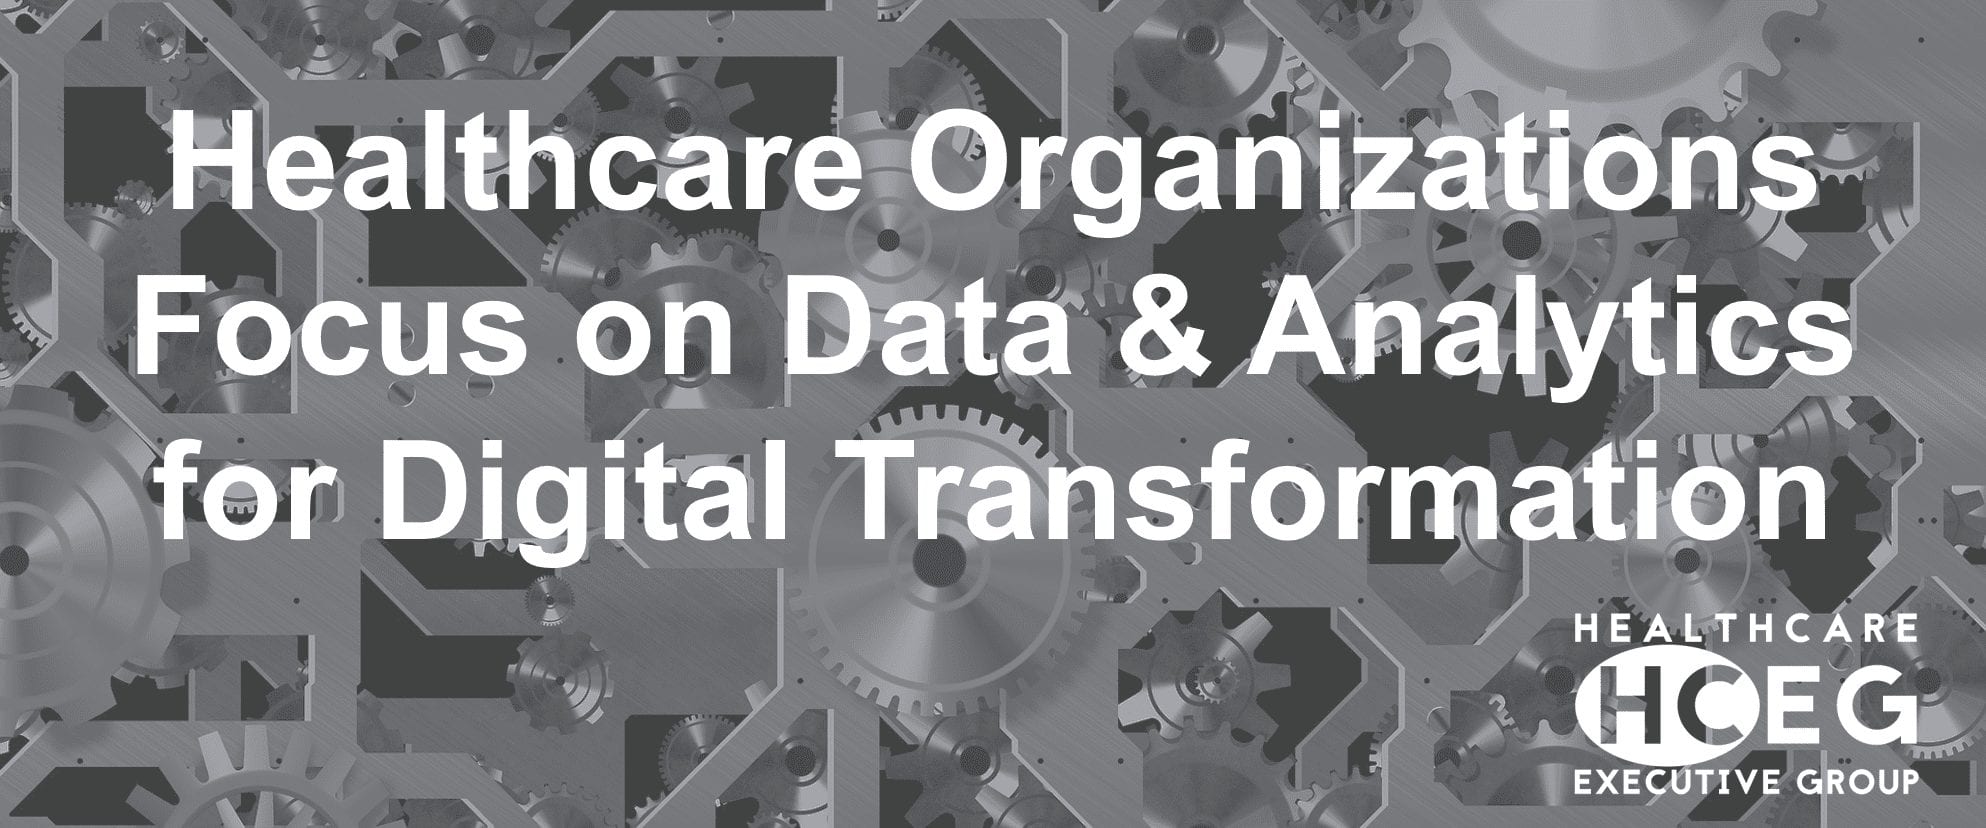 Healthcare Organizations Focus on Data & Analytics for Digital Transformation